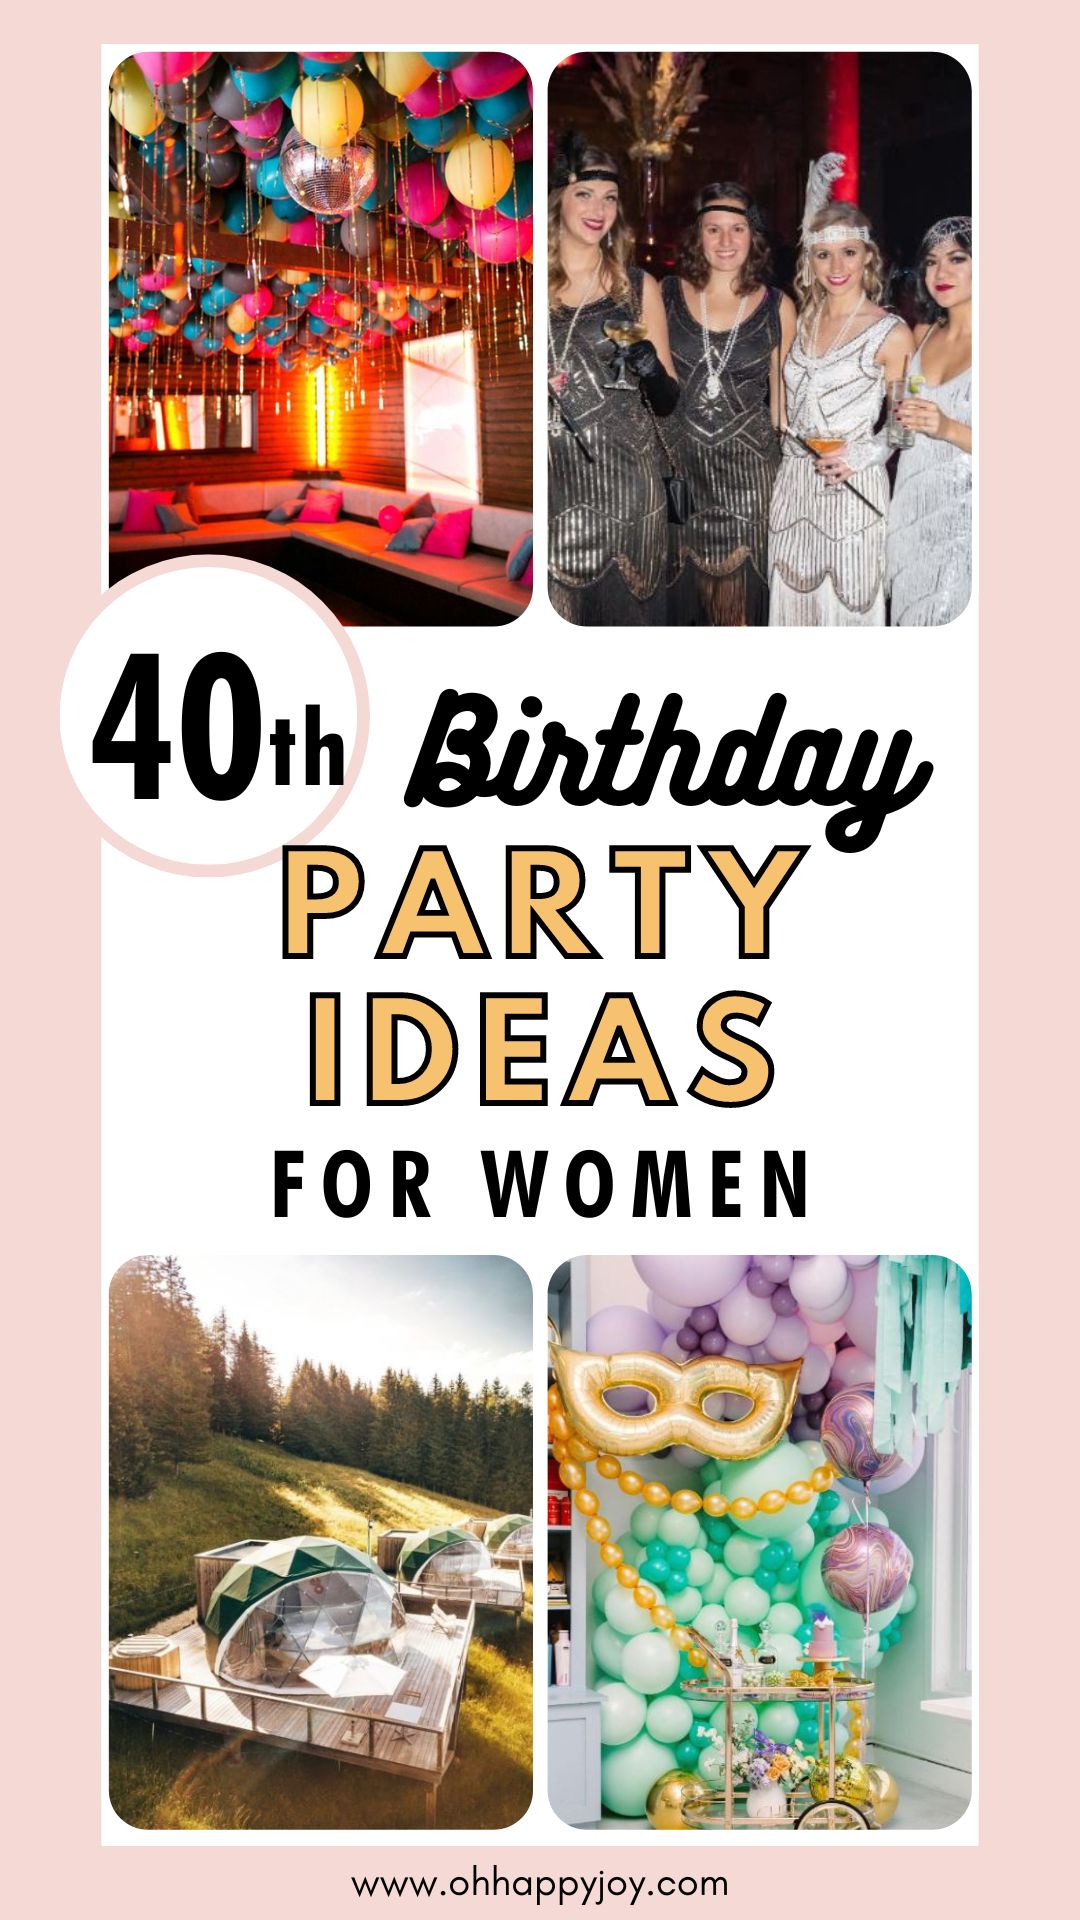 40th Birthday Ideas for Women